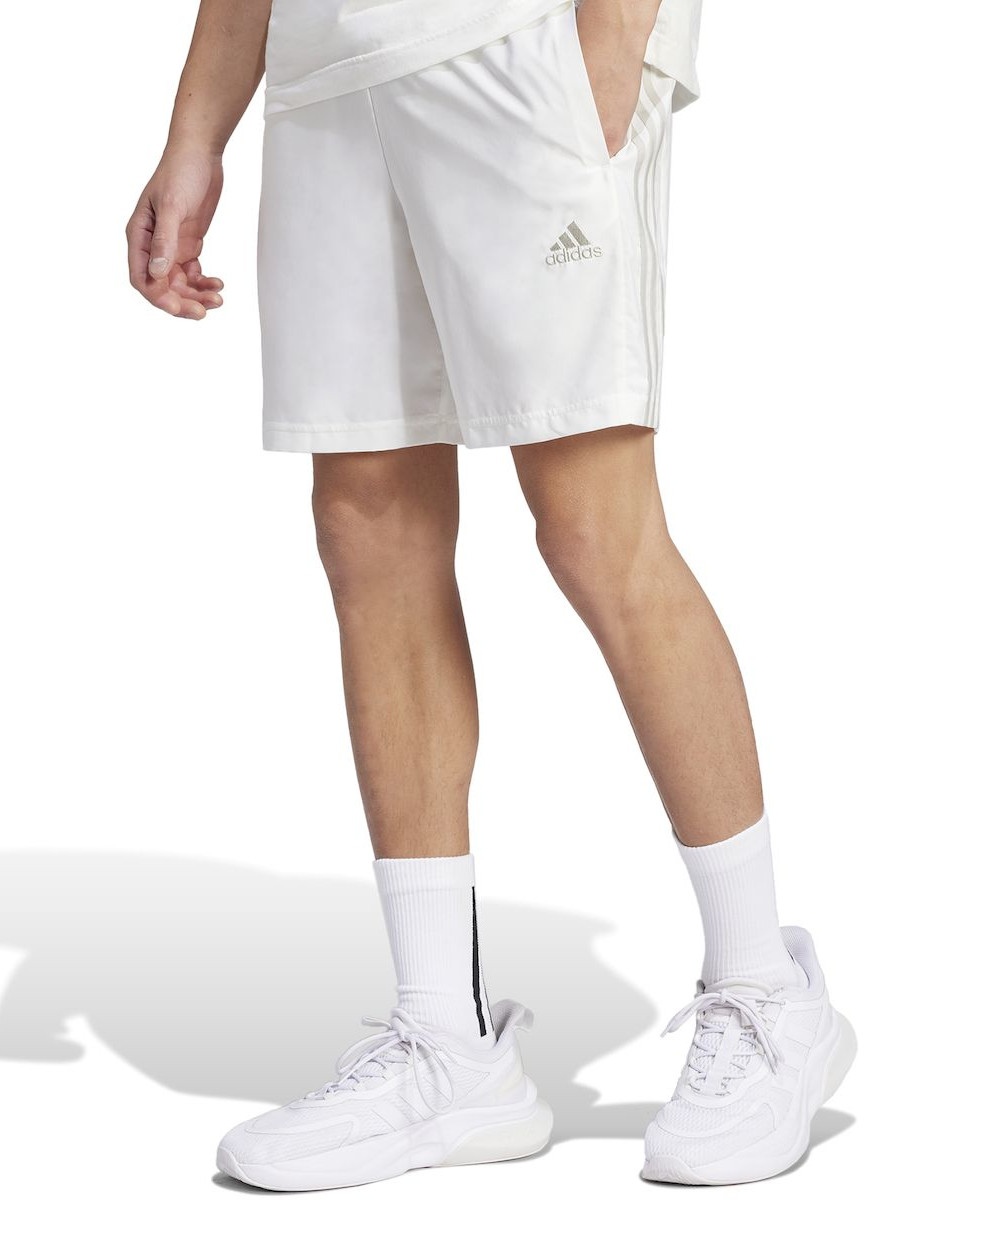  Pantaloncini Shorts UOMO Adidas 3 Stripes Chelsea Off White